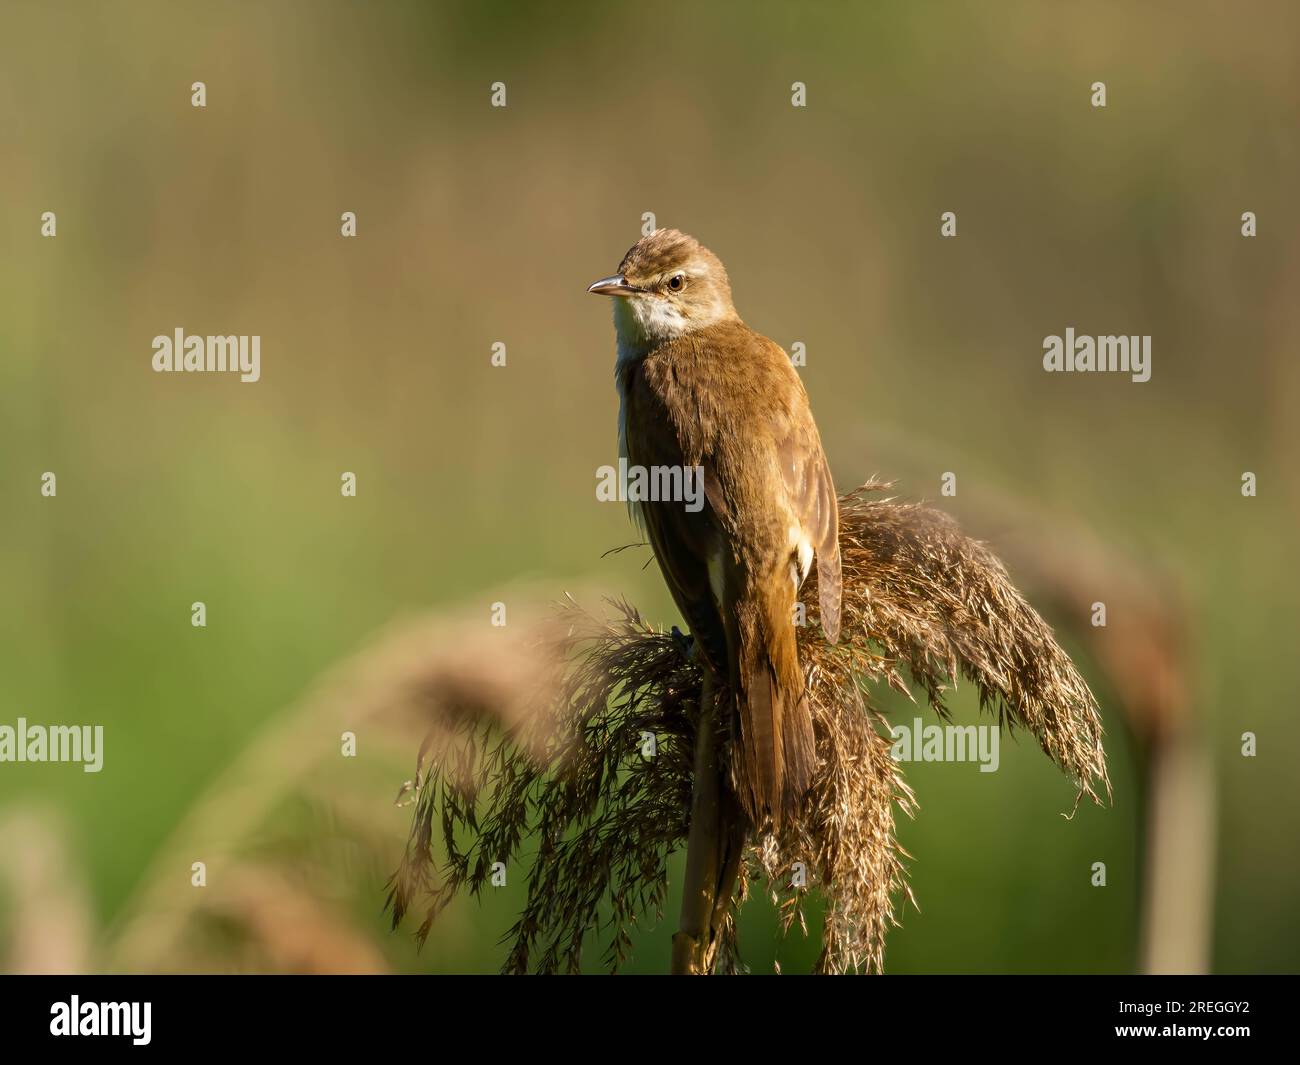 Großer Reed Warbler in grüner Umgebung auf trockenem Gras. Stockfoto